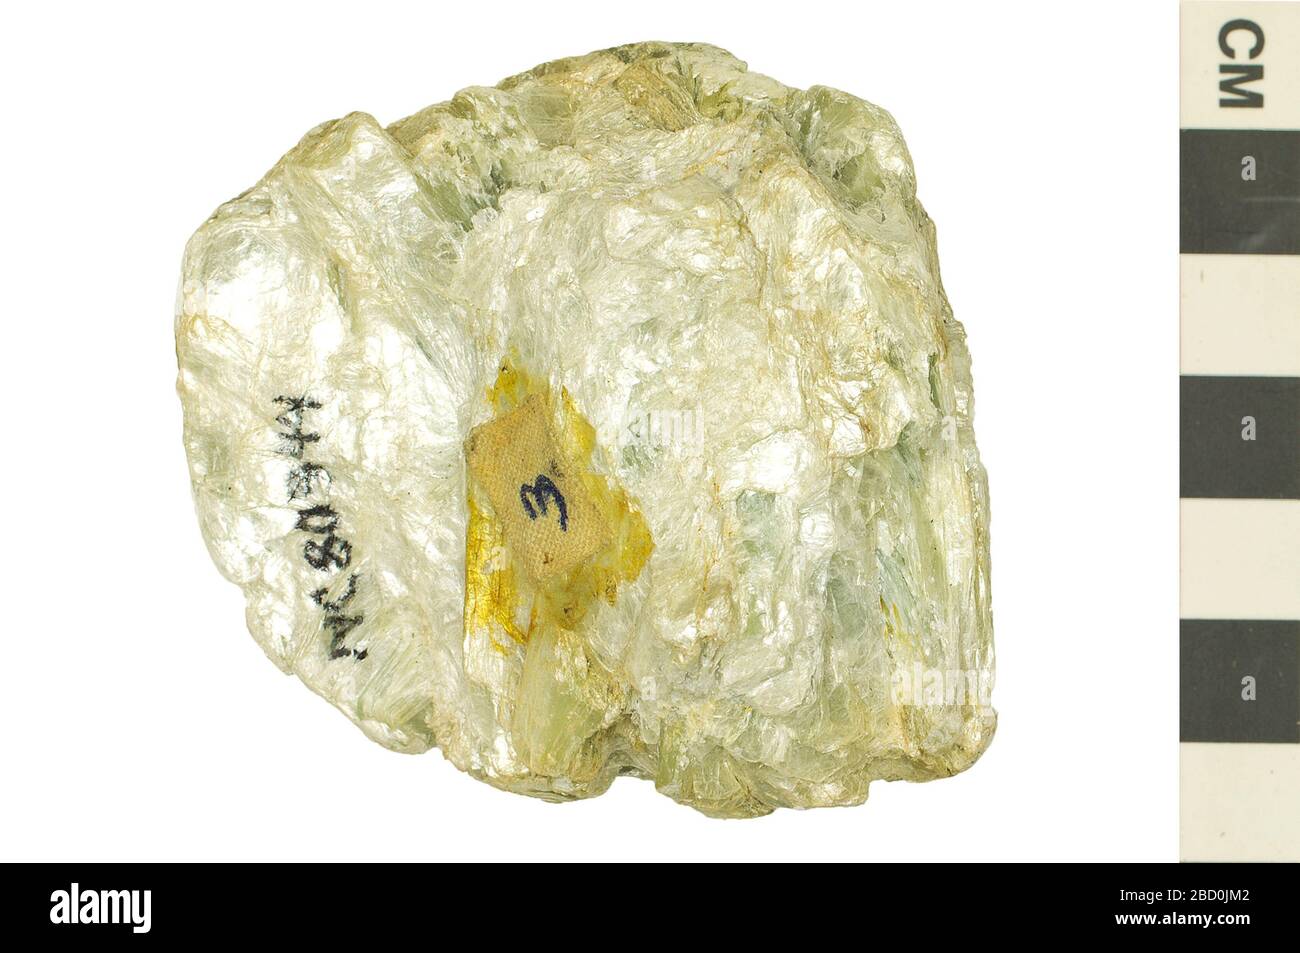 Phyllosilikatmineral Talk. EO 080344 Silicate Mineral Talc 002.jpg Stockfoto